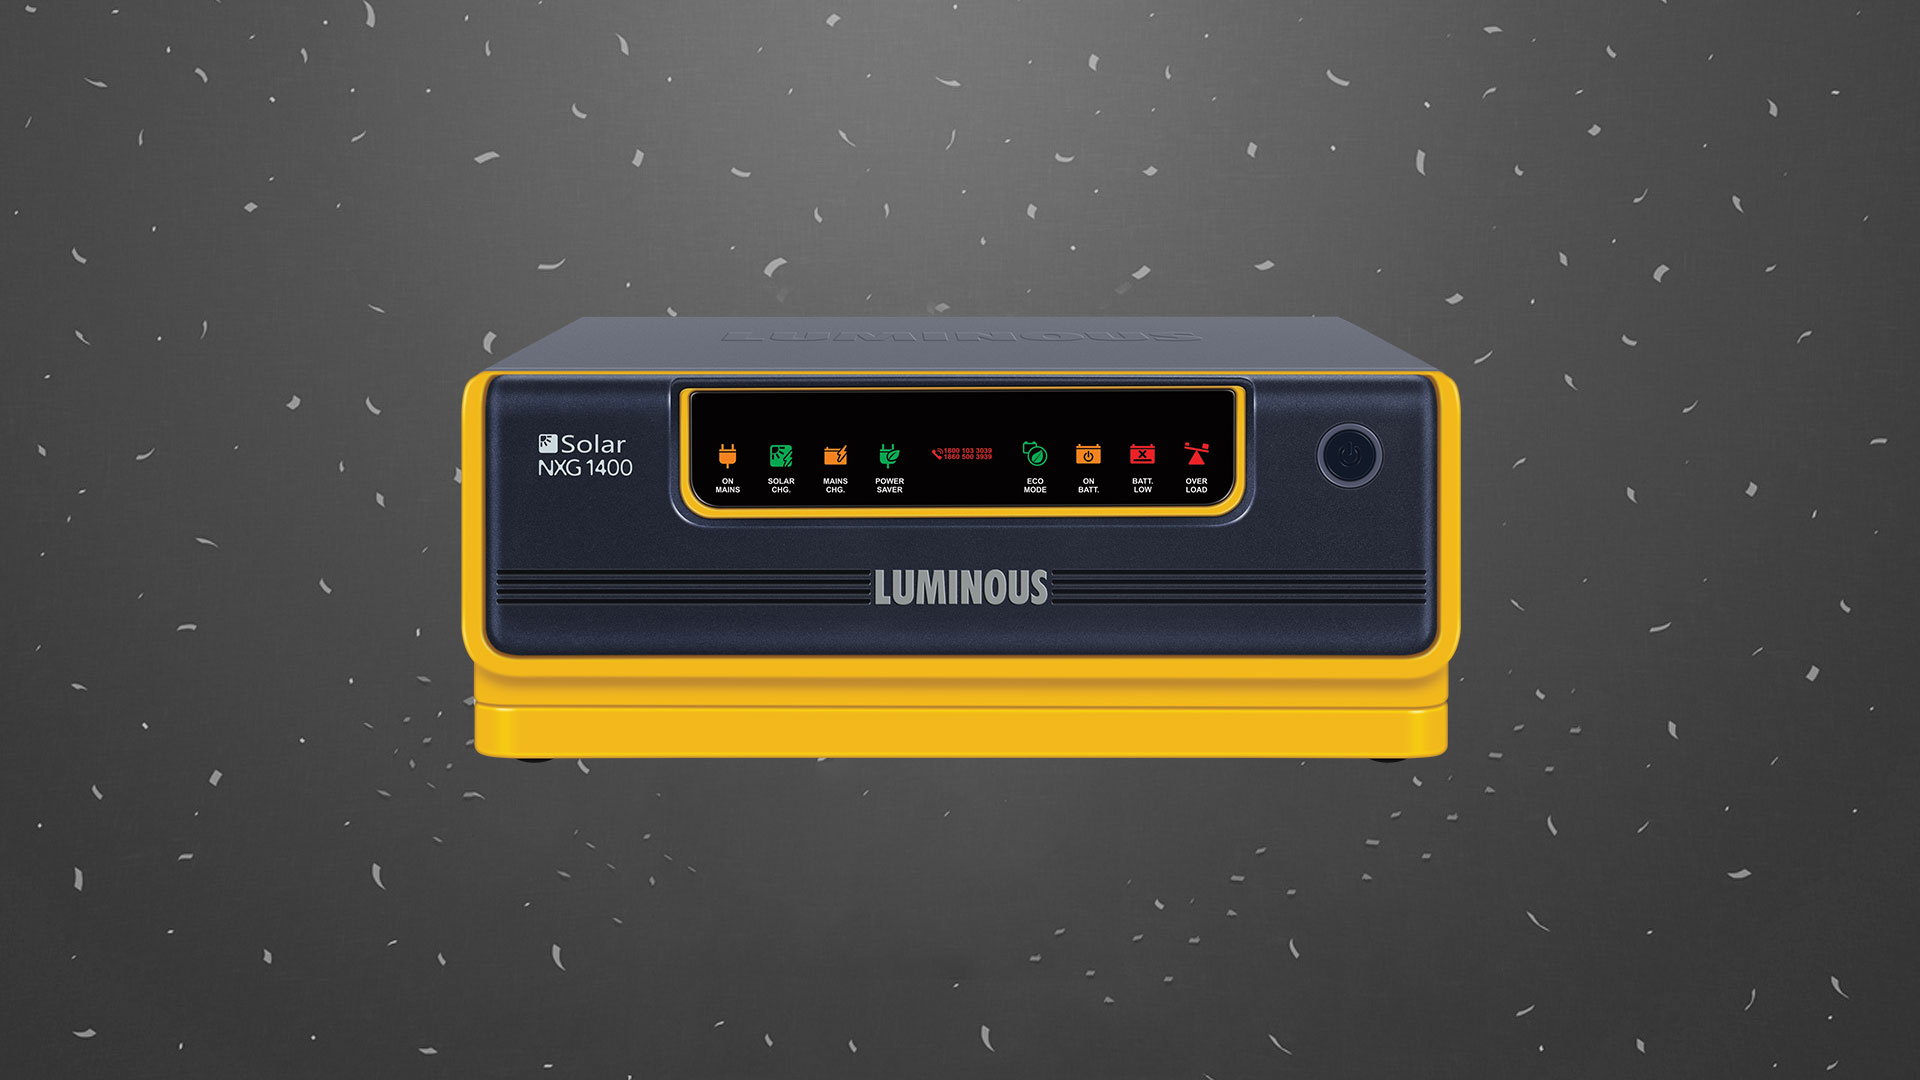 Luminous Solar NXG 1400 Inverter UPS